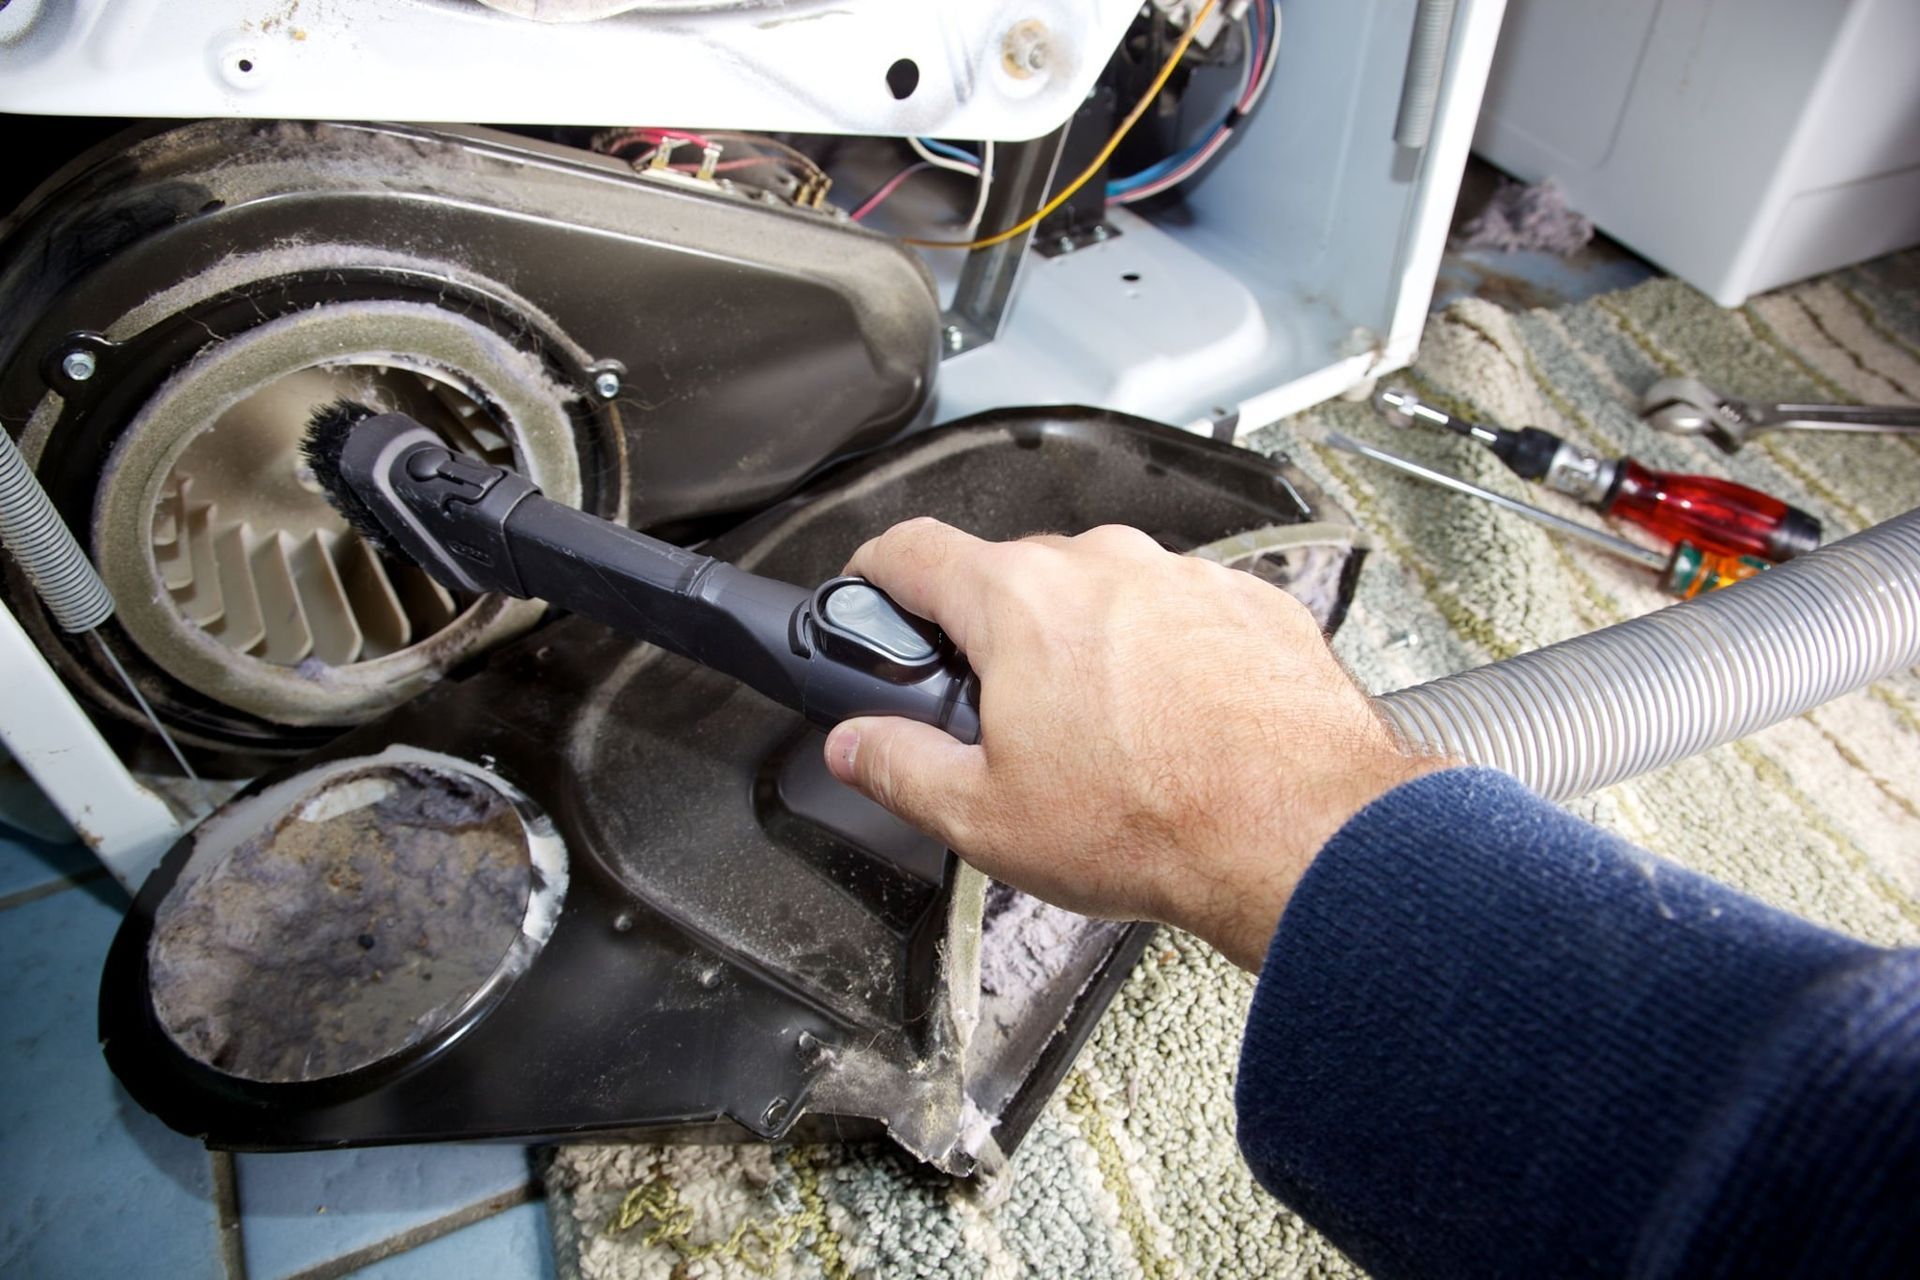 John B Laundry repairs a electric dryer servicing in Massachusetts Regions